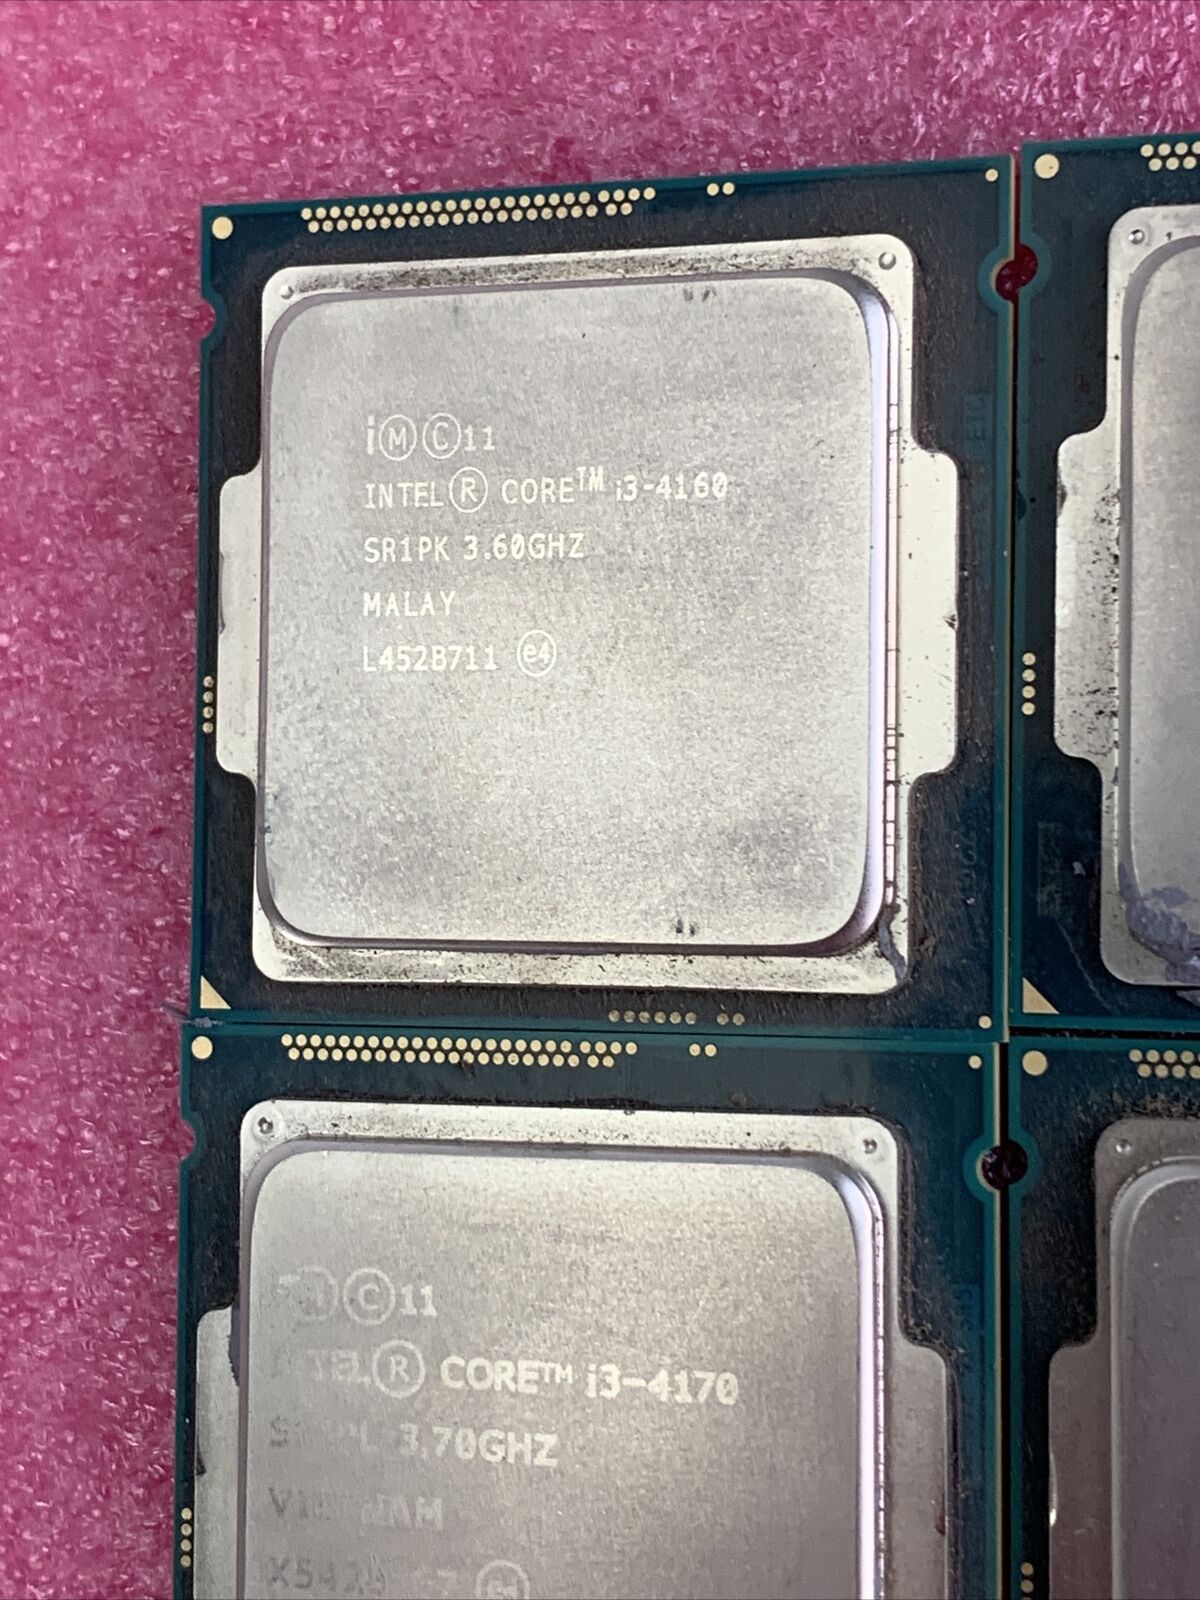 Mix lot of 2x Intel Core i3-4170 w/ 2x Intel Core i3-4160